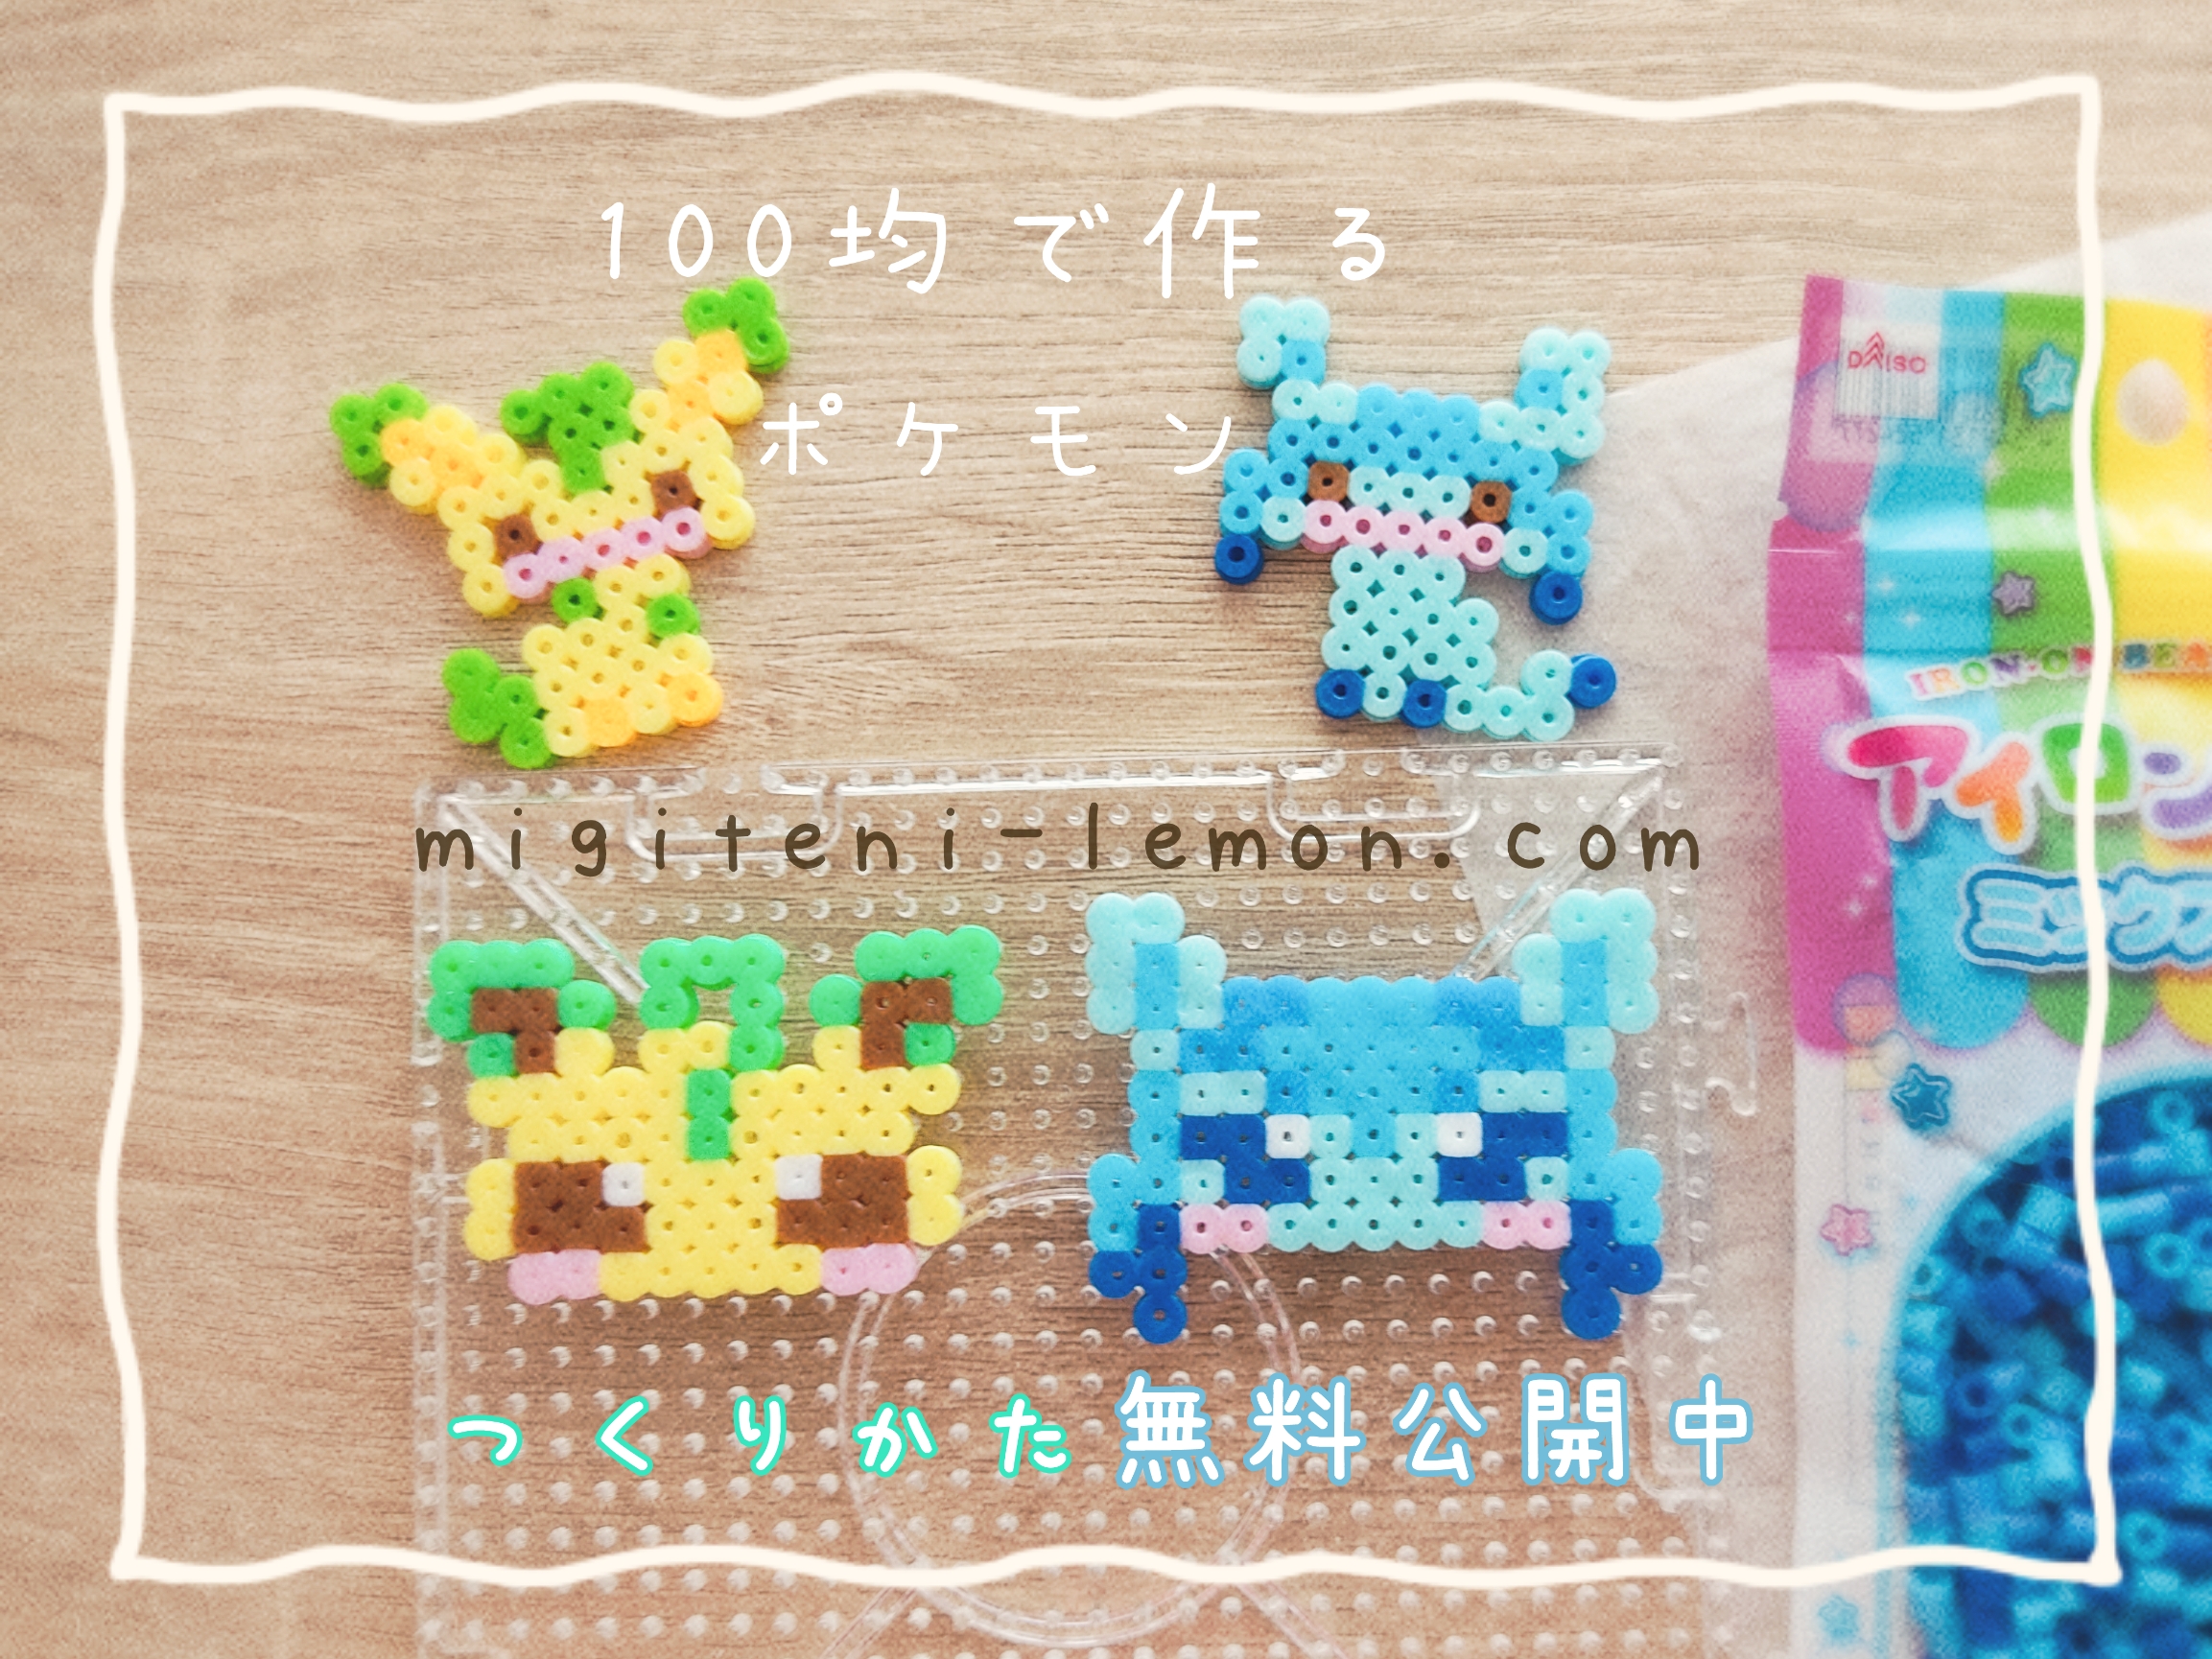 glacia-glaceon-leafia-leafeon-face-pokemon-handmade-daiso-iron-beads-free-zuan-kawaii-small-square-blue-green-kids